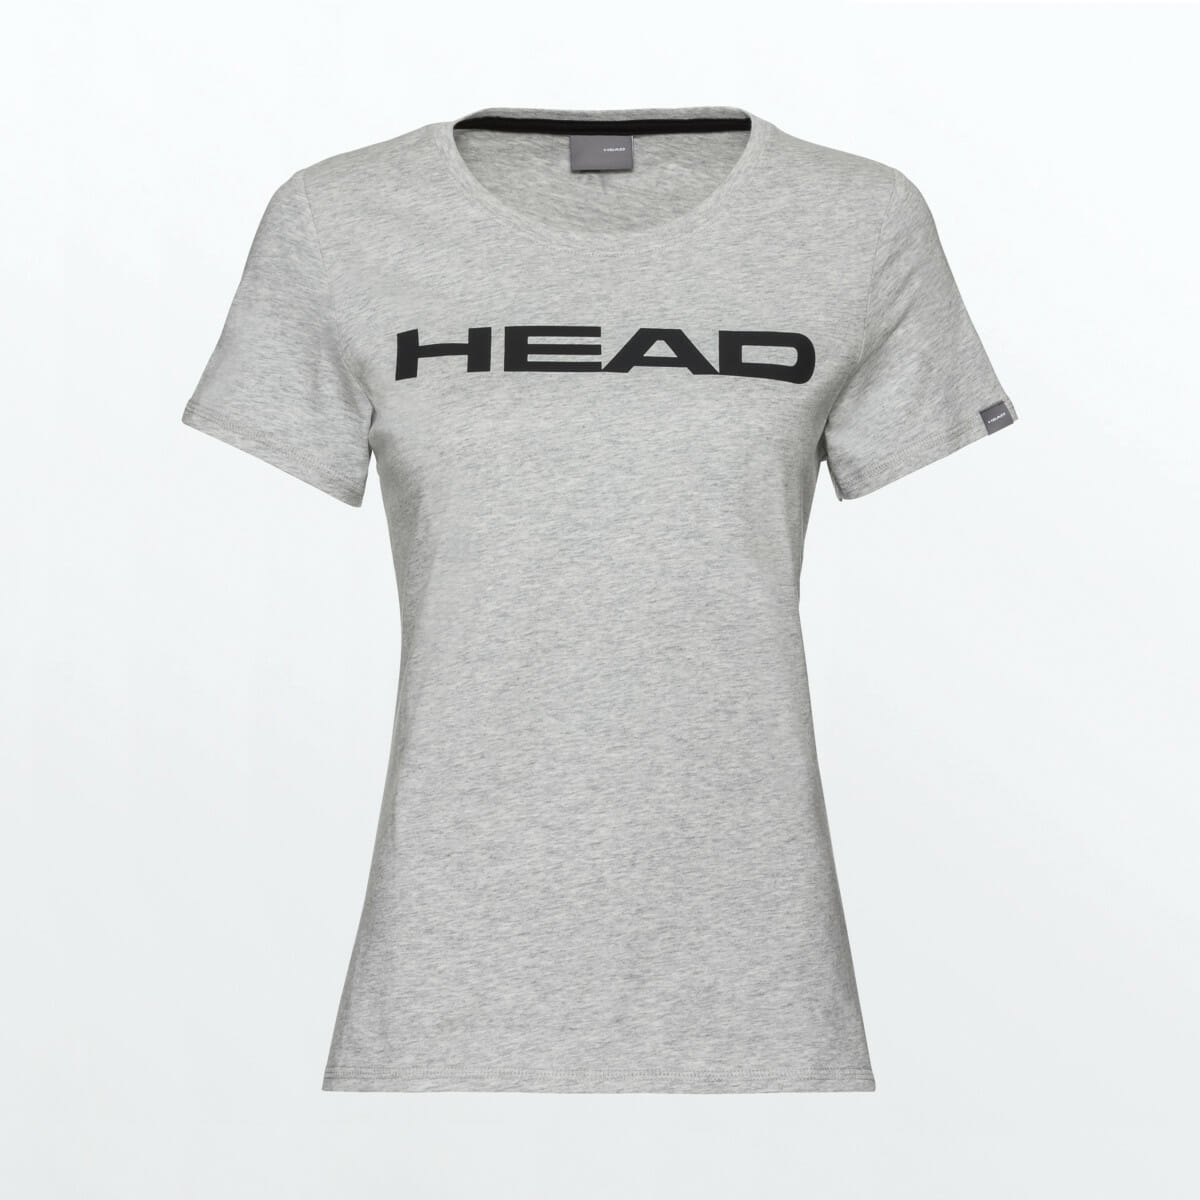 HEAD CLUB LUCY GRAY T-Shirt Women